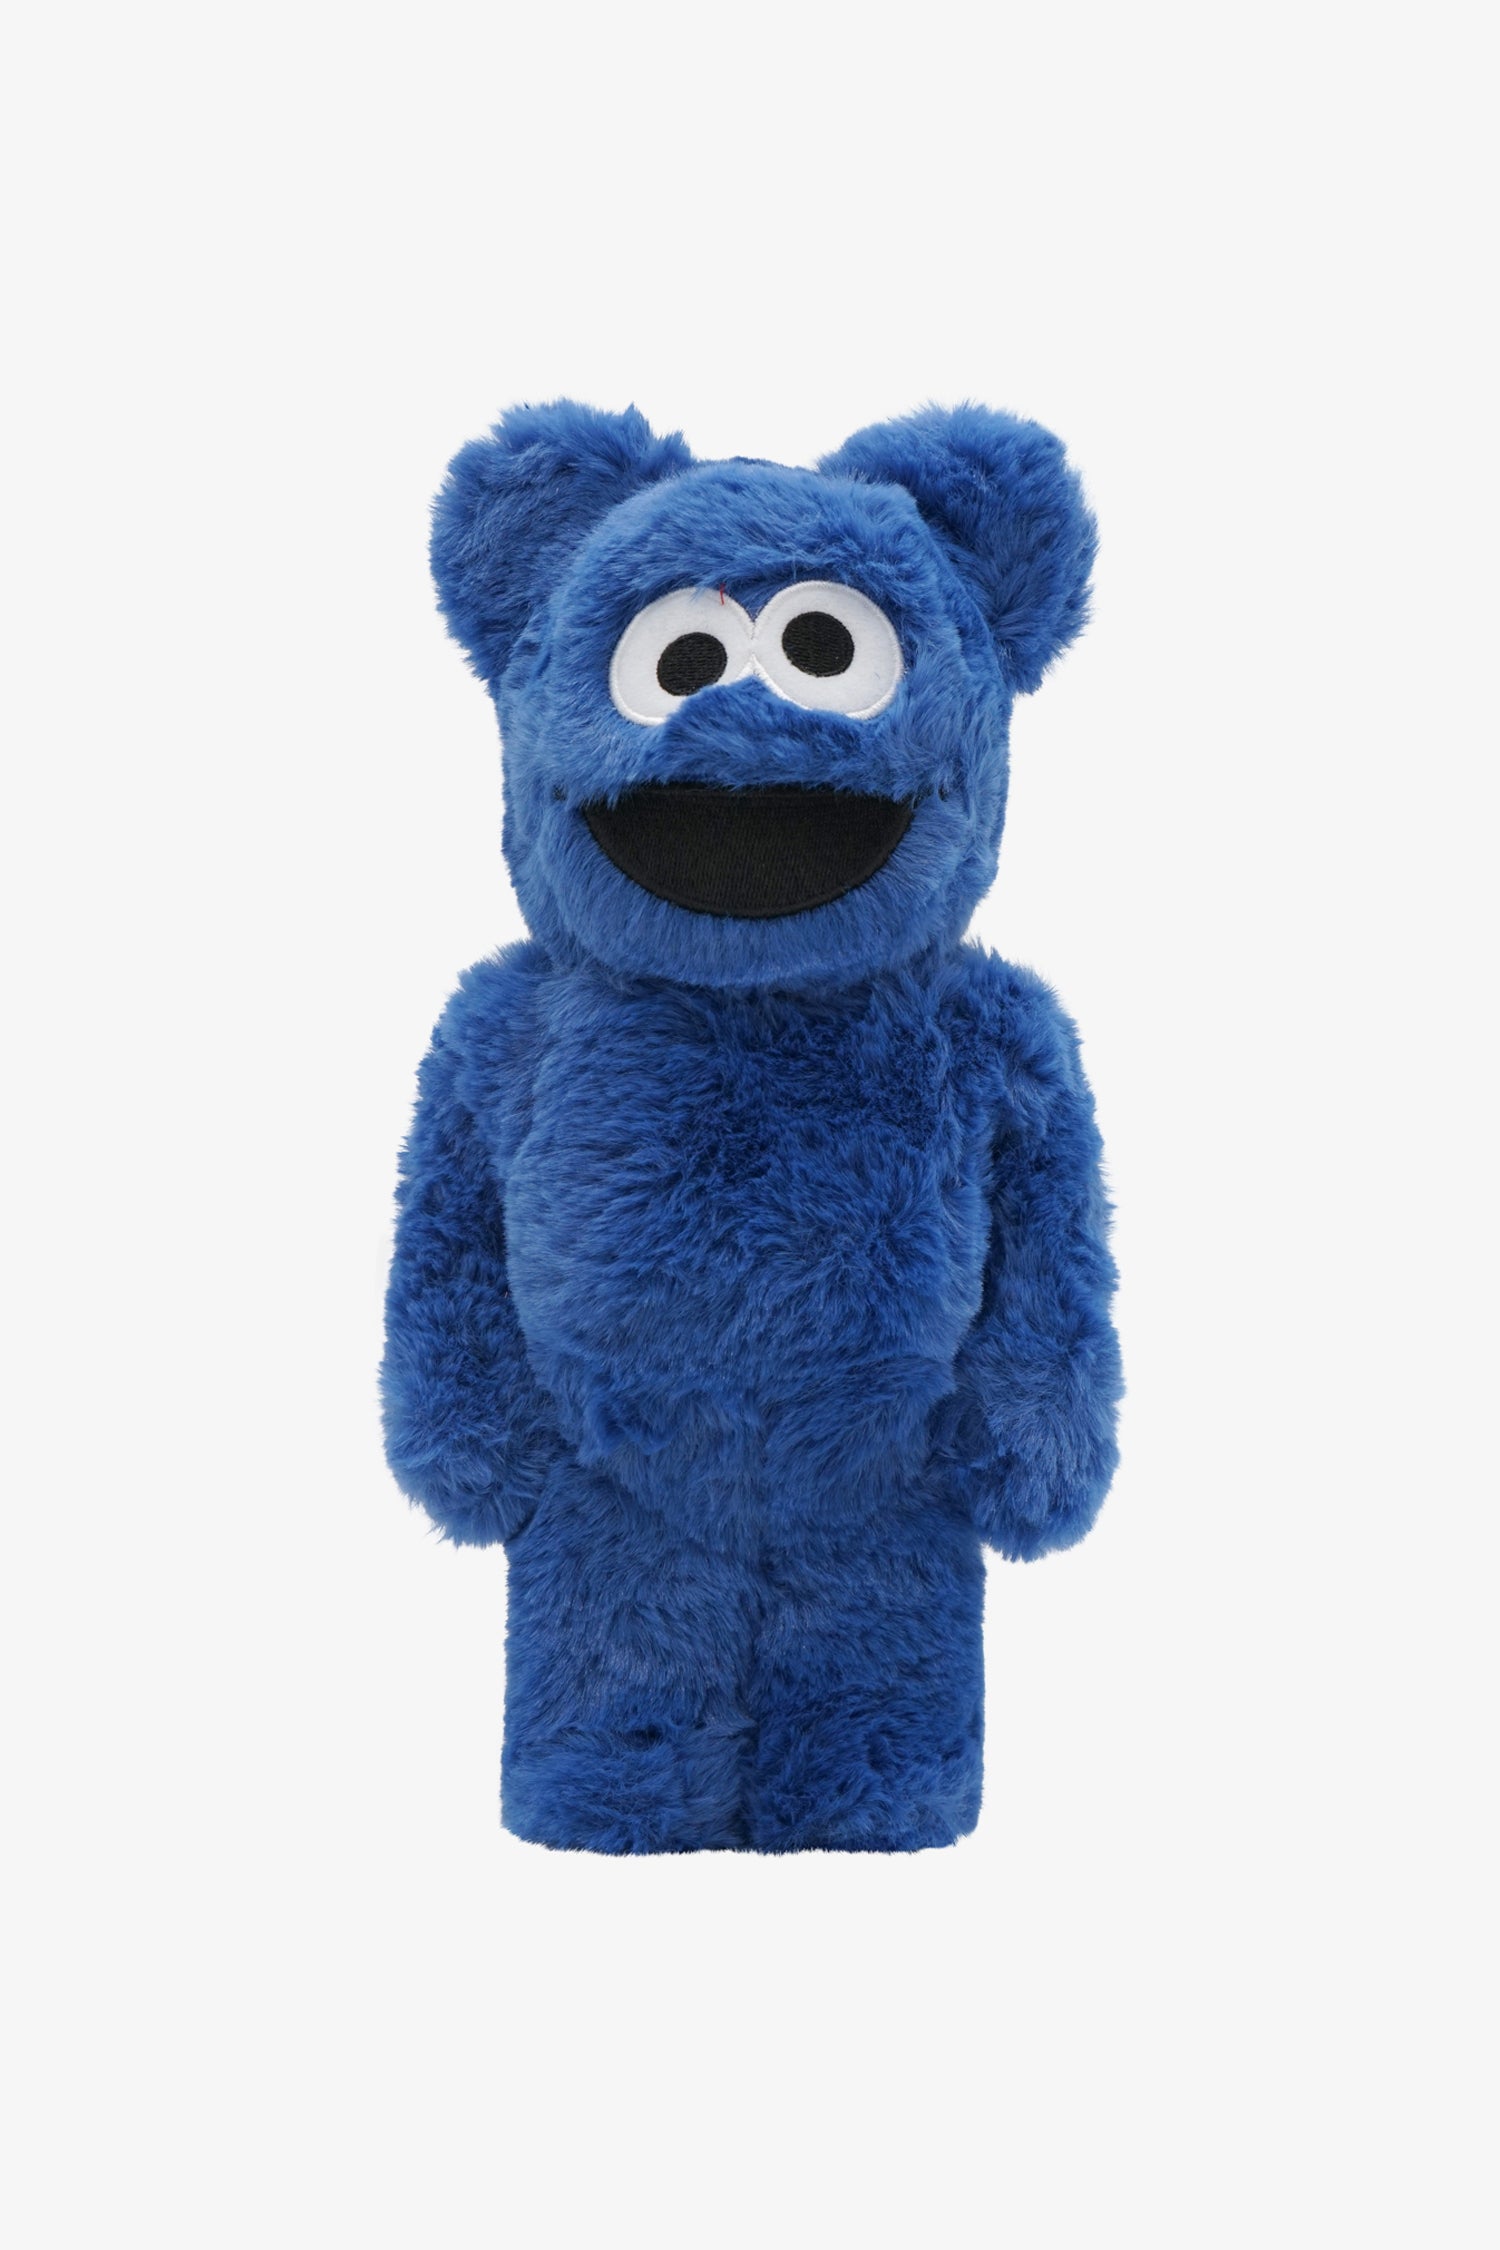 Selectshop FRAME - MEDICOM TOY Sesame Street "Cookie Monster Costume ver." Be@rbrick 400% Collectibles Dubai